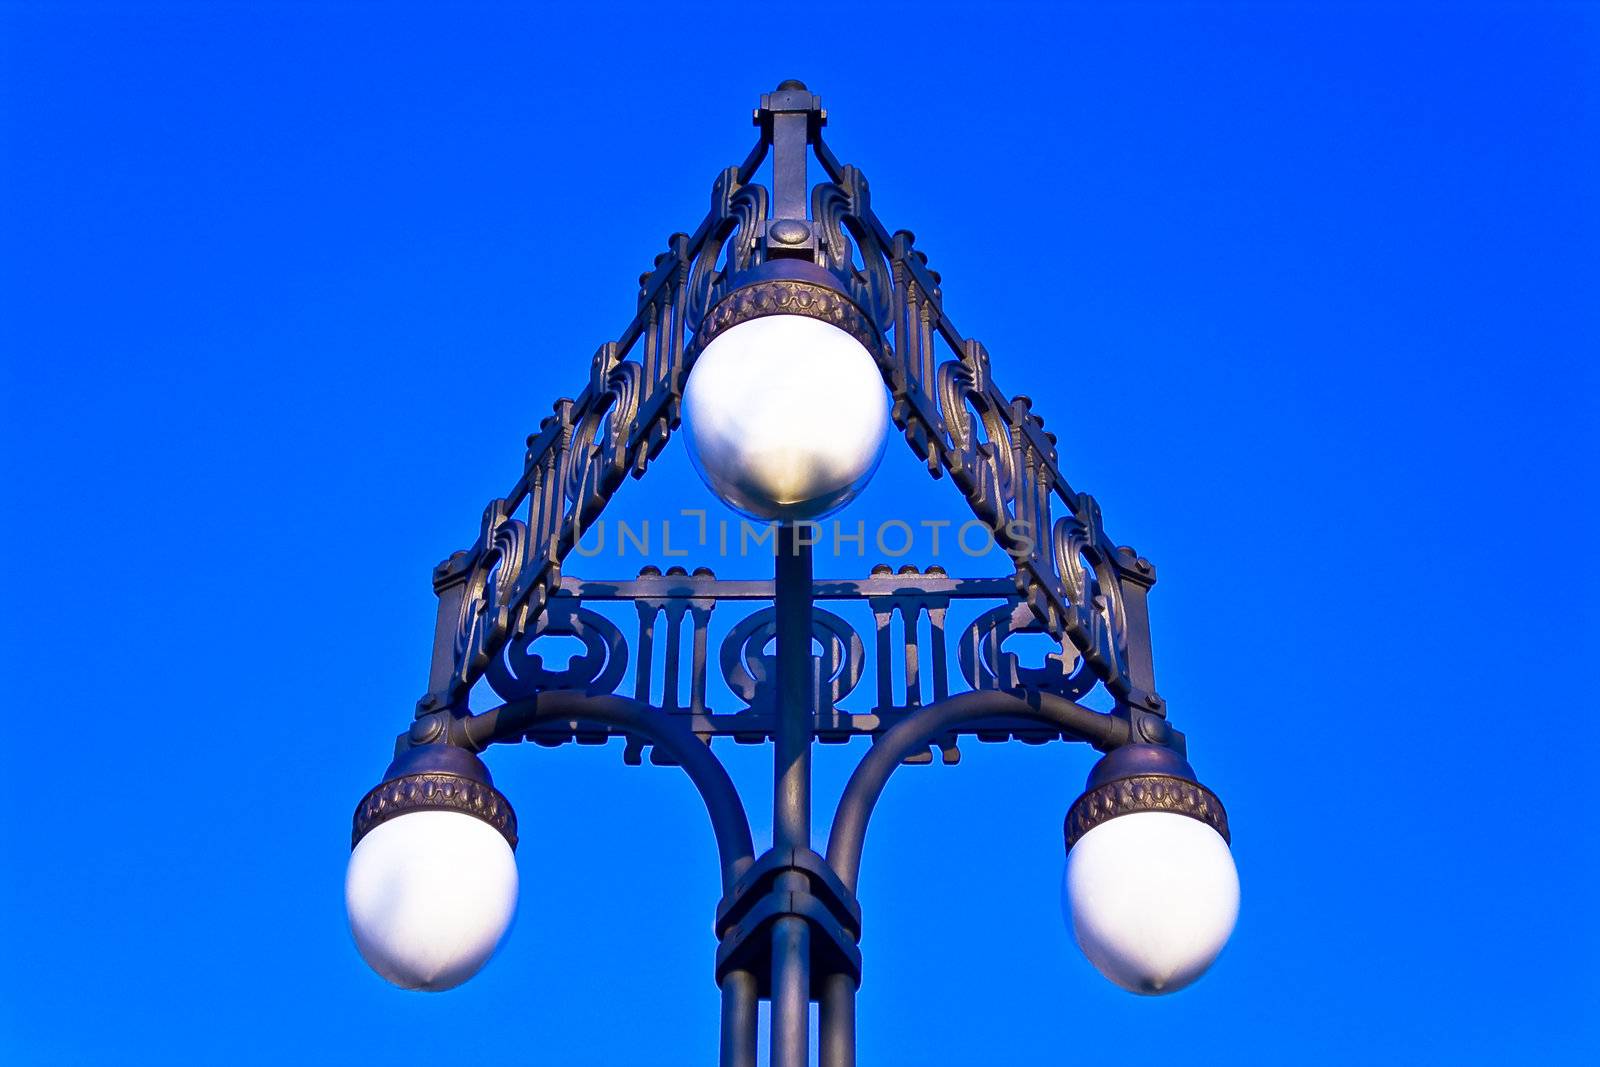 Old street lamppost on blue sky